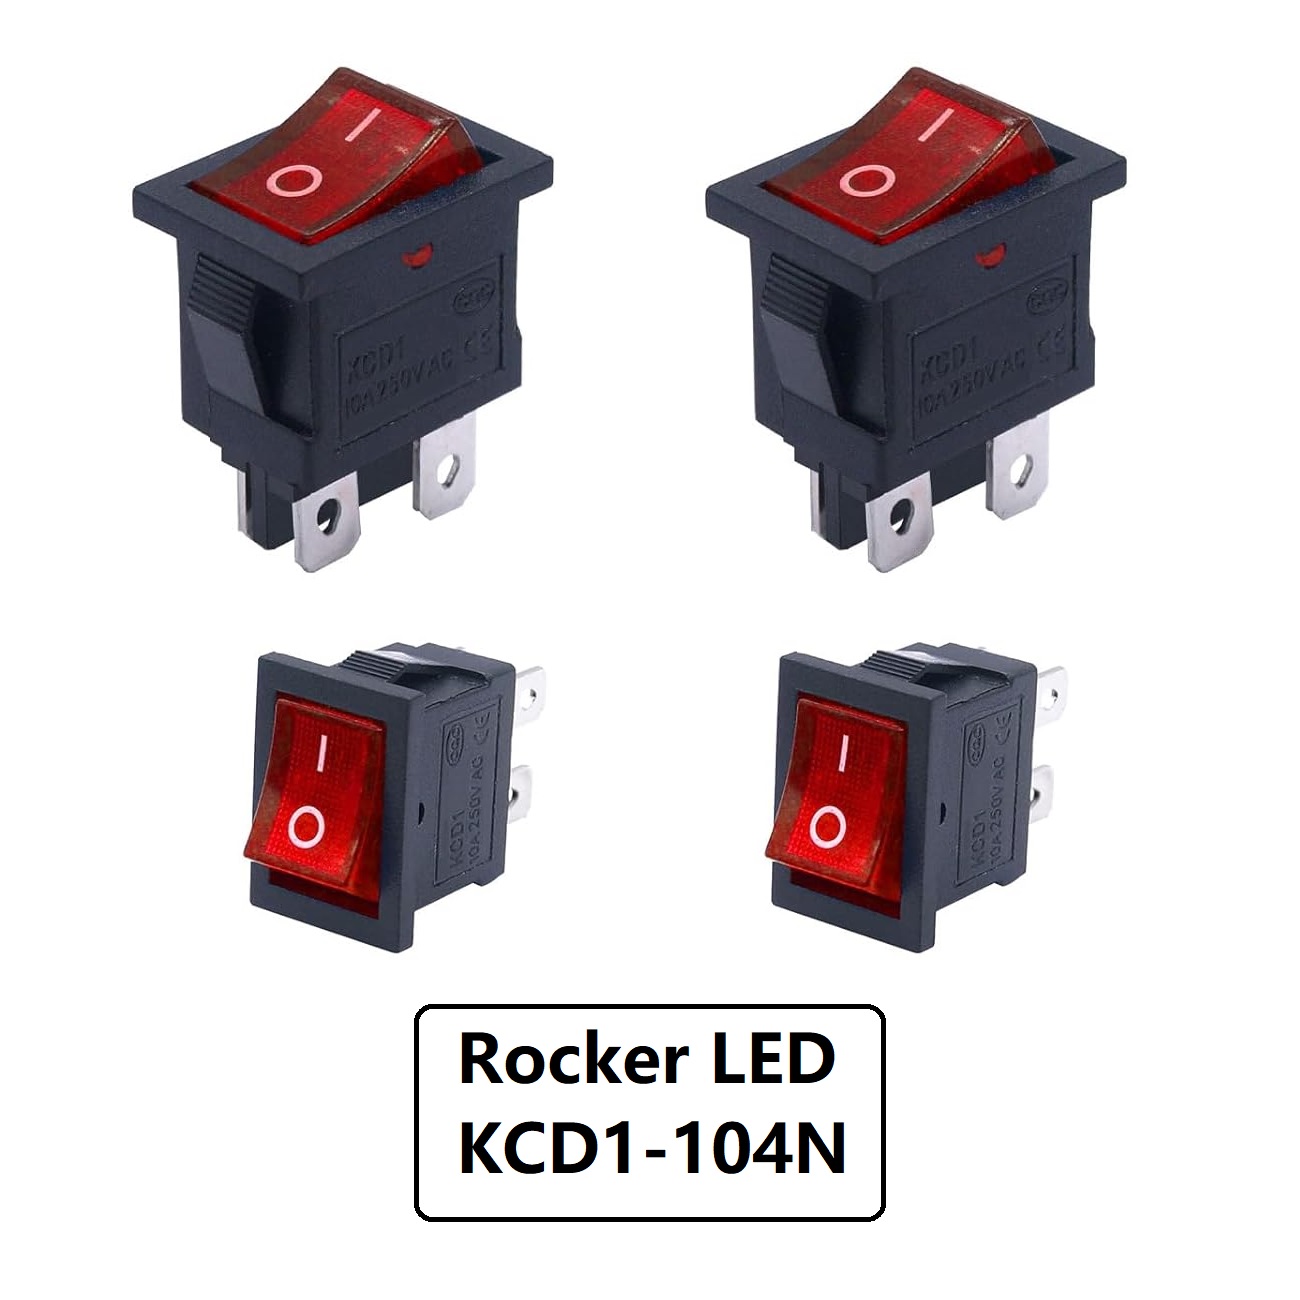 کلید راکر متوسط دو حالت 4 پایه KCD1-104N چراغ دار